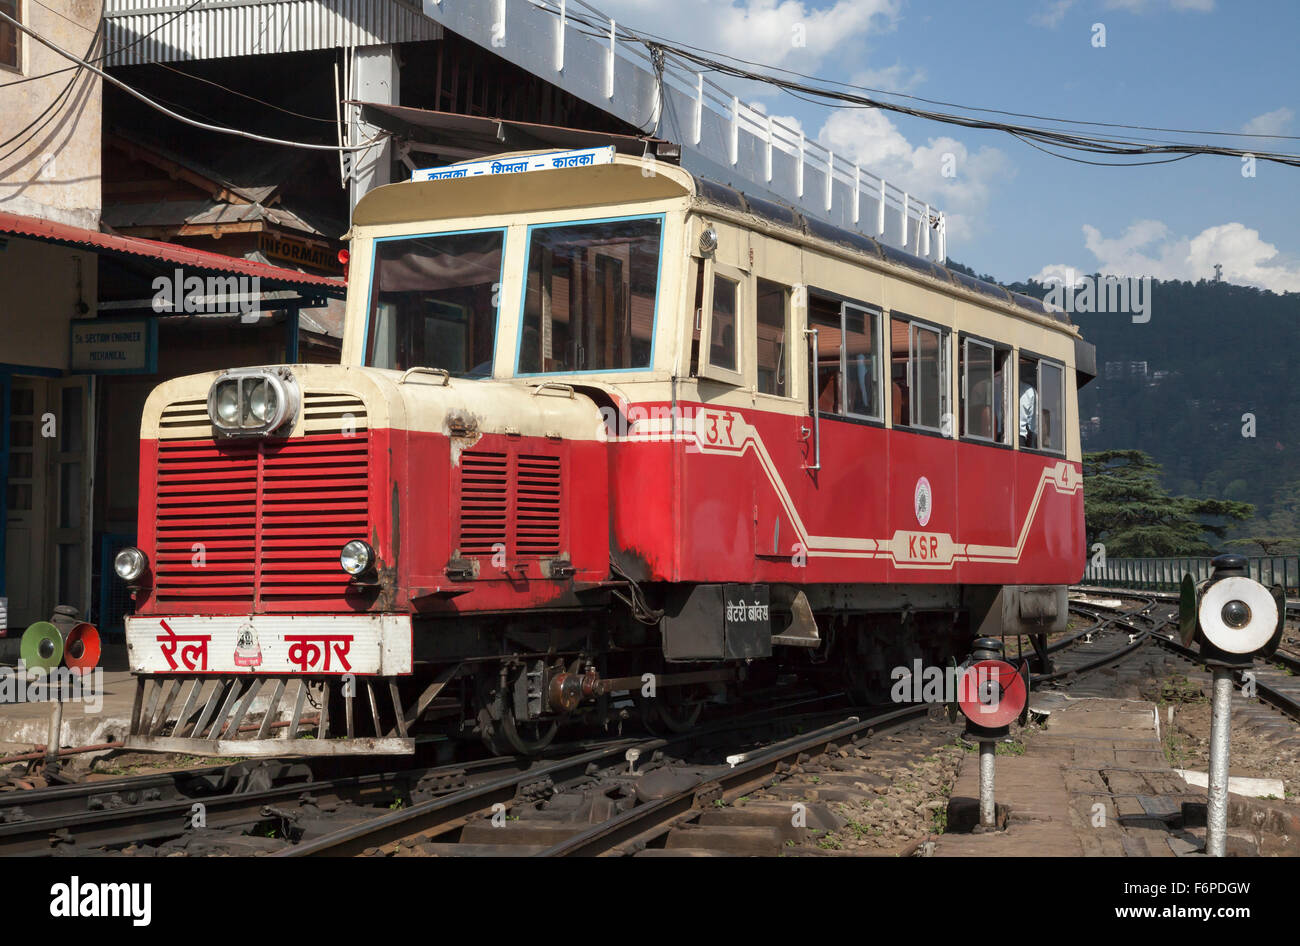 Railcar No.4 of the Kalka-Shimla Railway at Shimla railway station Stock Photo